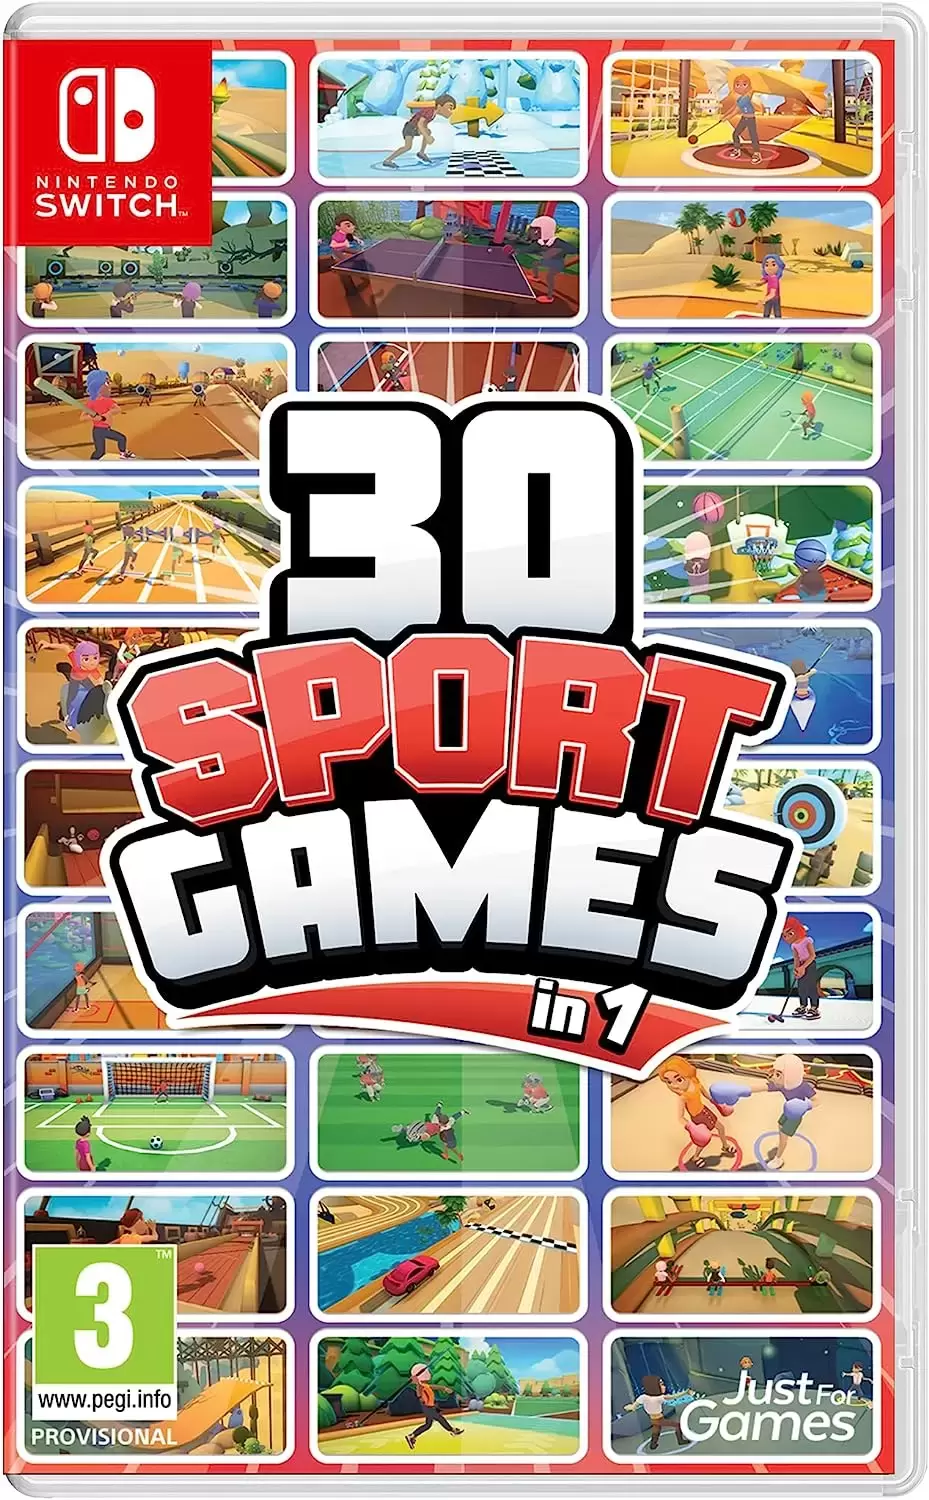 Nintendo Switch Games - 30 Sport Games in 1